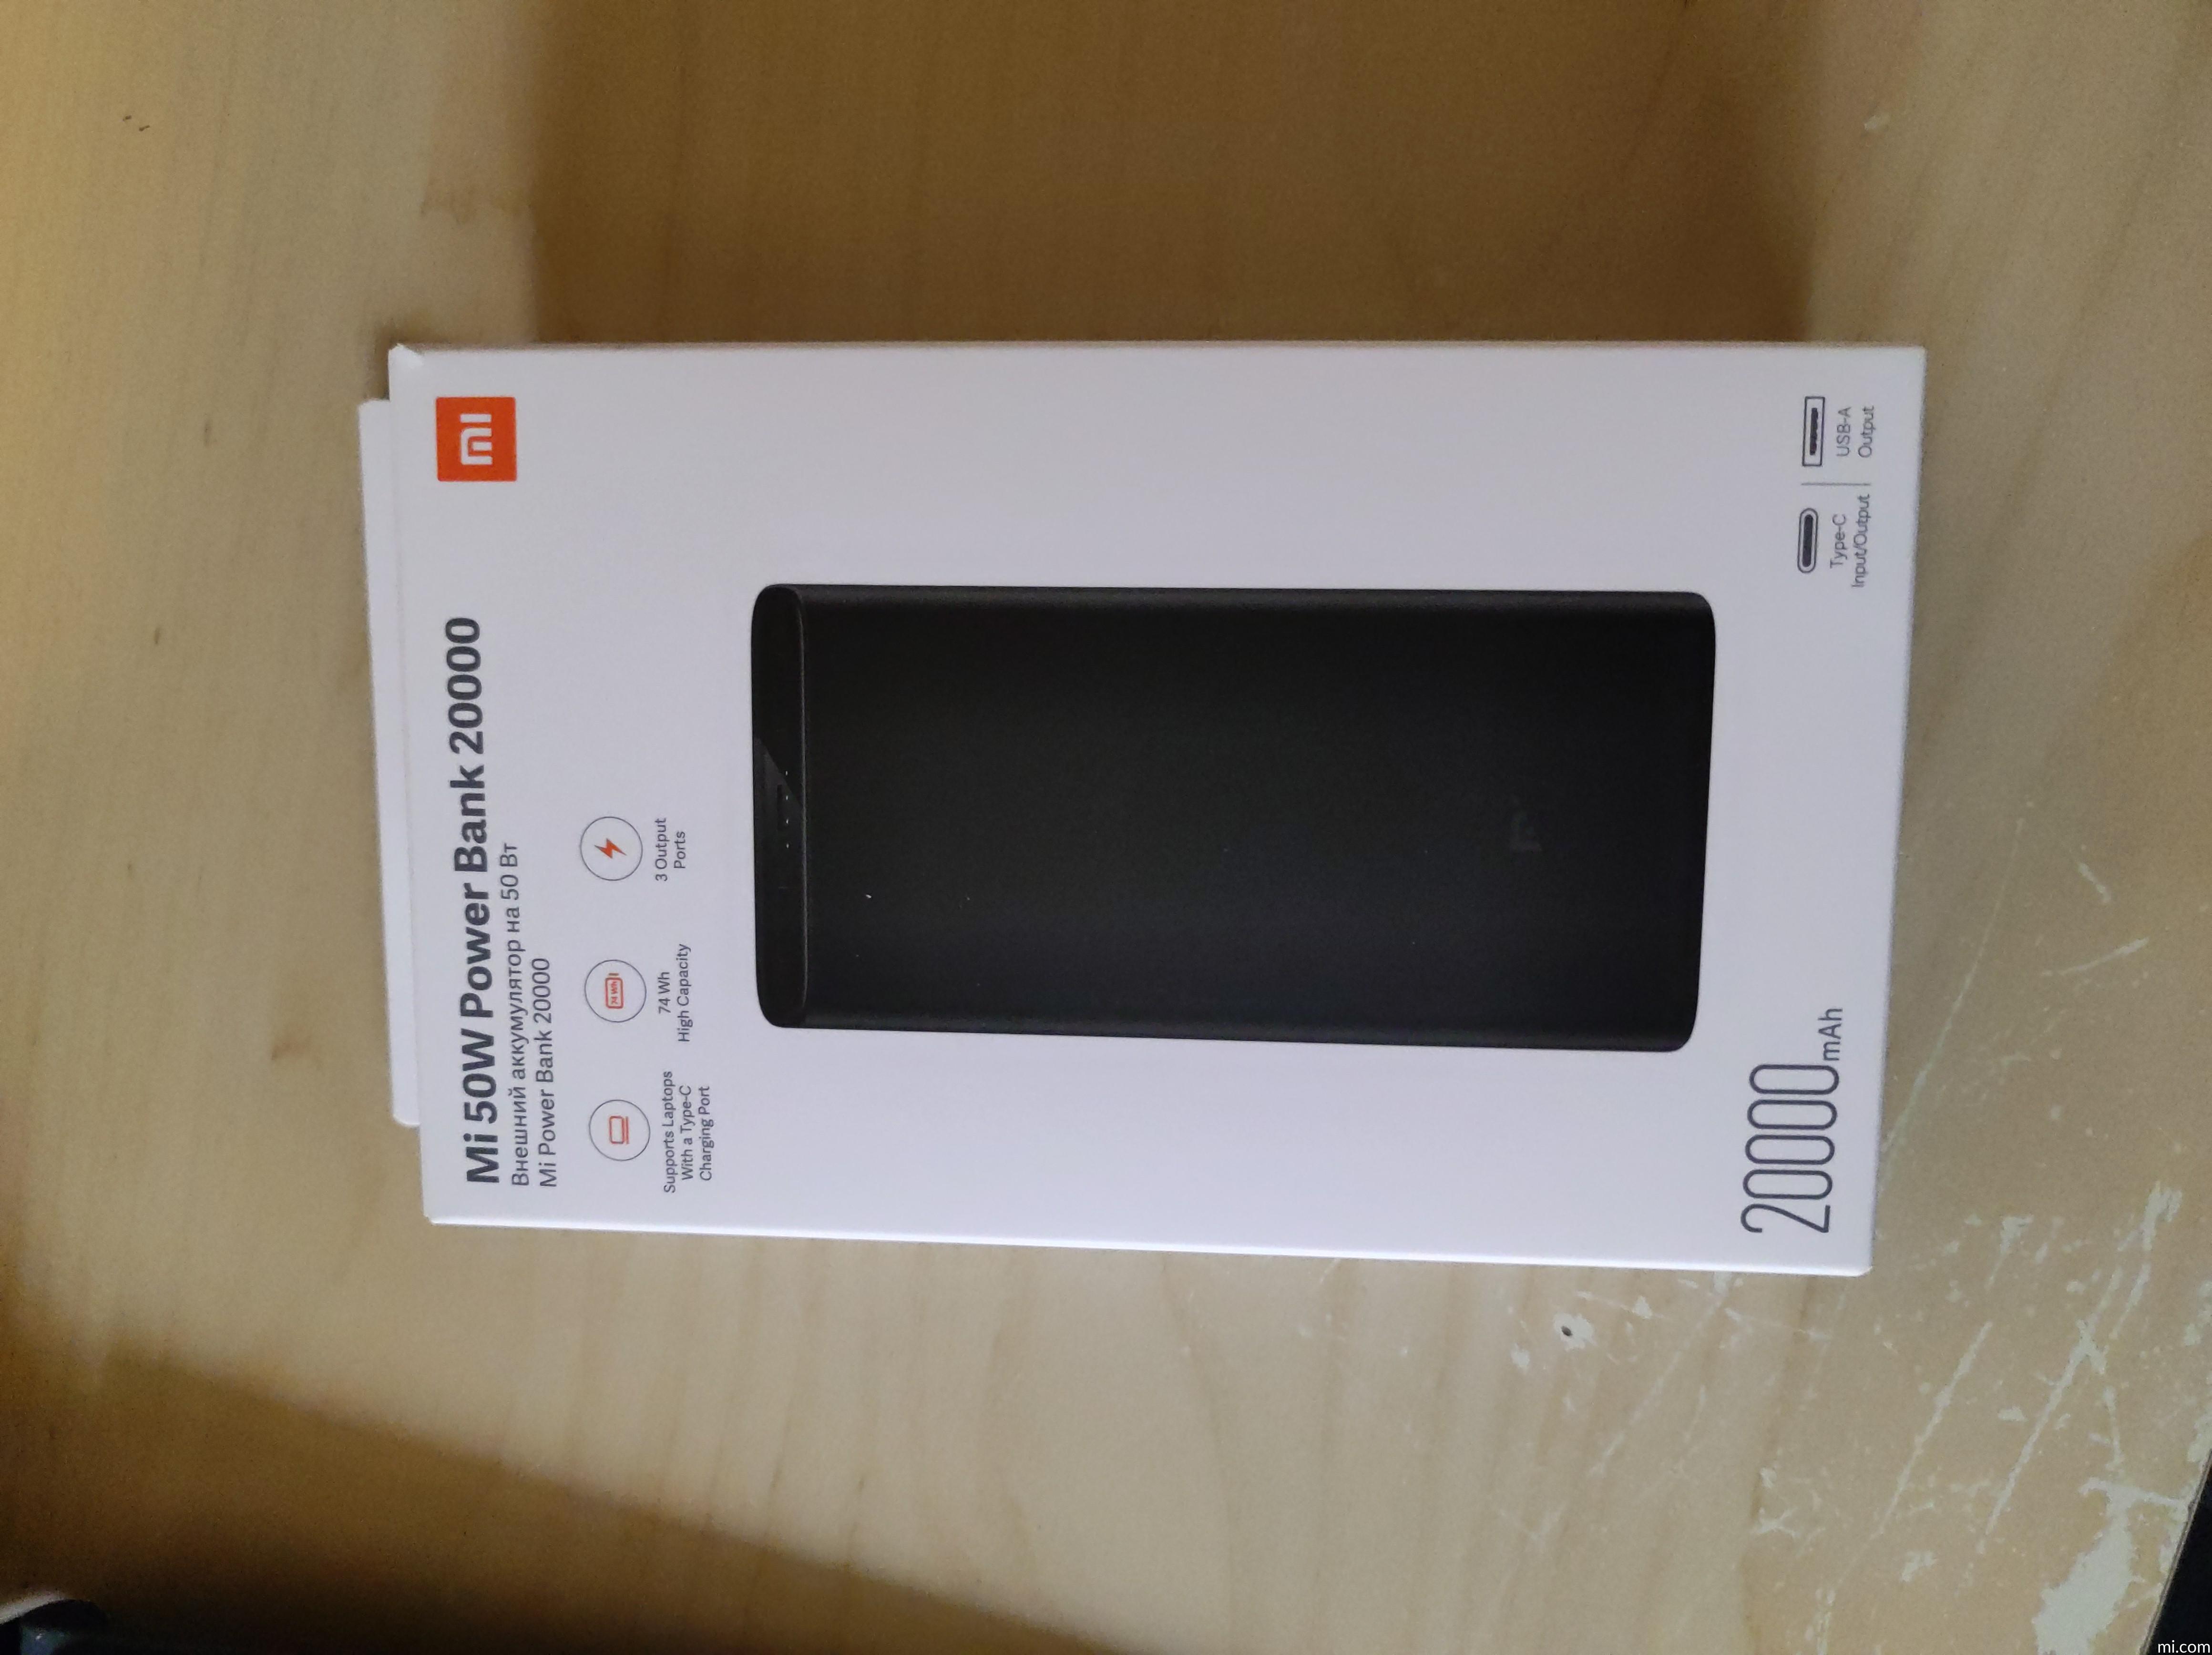 Batería externa Xiaomi, 20,000 Mah, 50w, negro